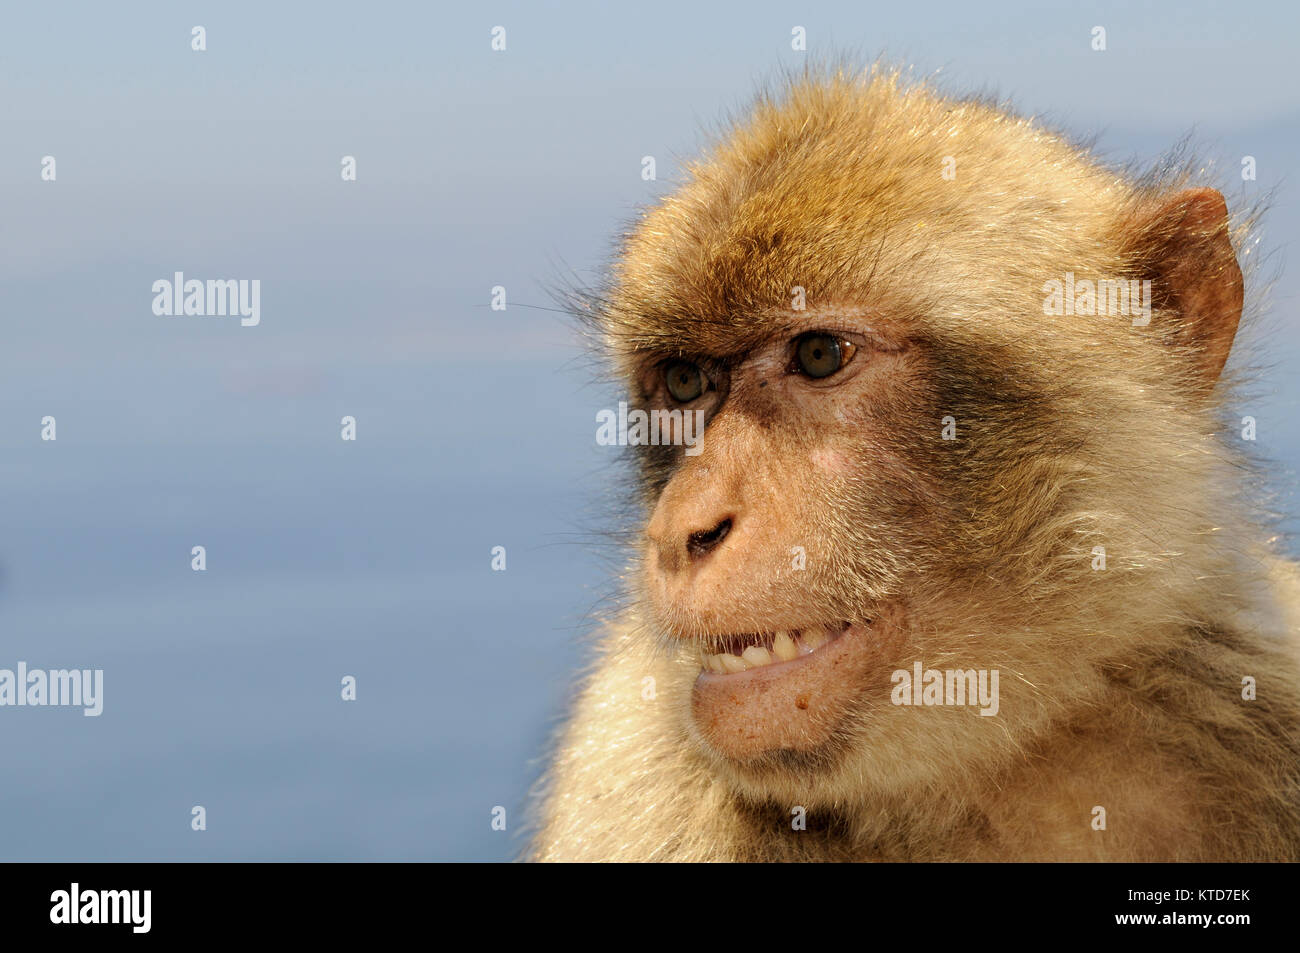 Macaque de Barbarie (Macaca sylvanus) Gibraltar. Macaque de Barbarie (Macaca sylvanus) aussi connu sous : Barbary ape et rock singe. Macaques de Barbarie (Macaca sylva Banque D'Images